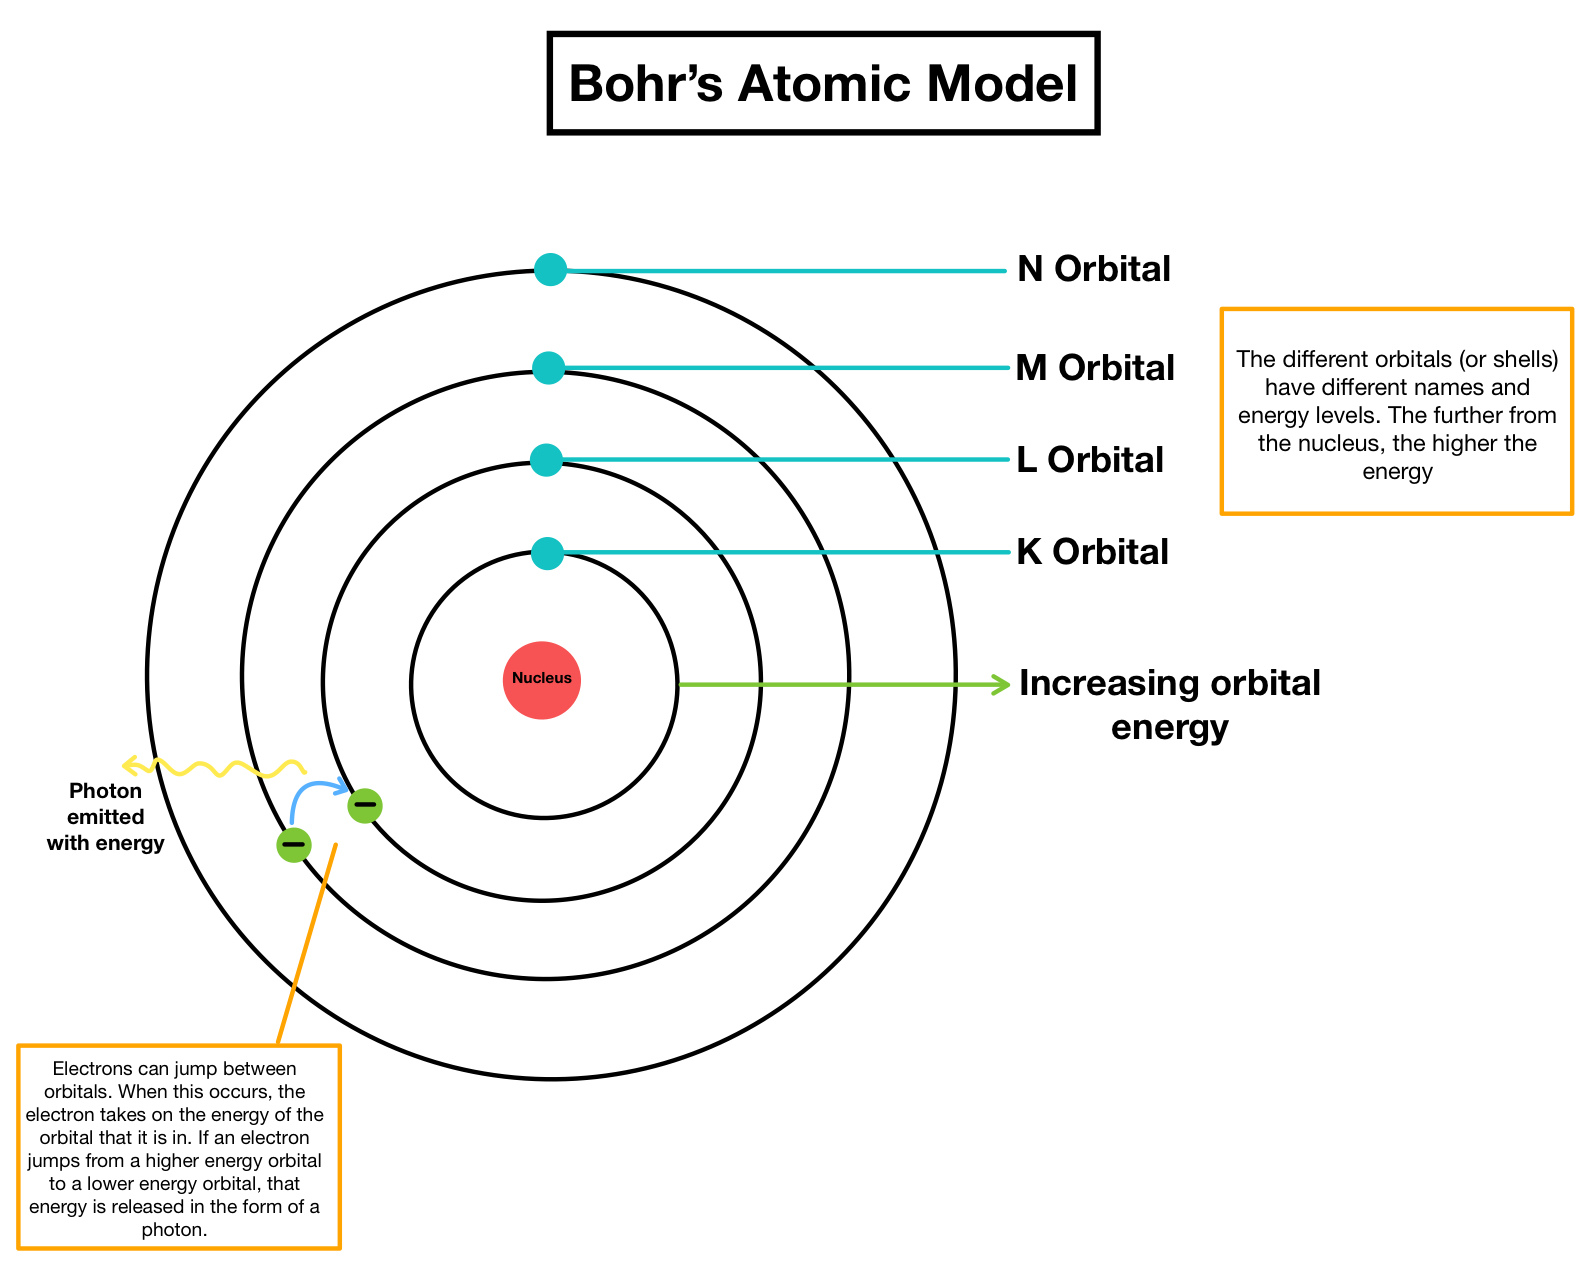 Bohrs atomic model